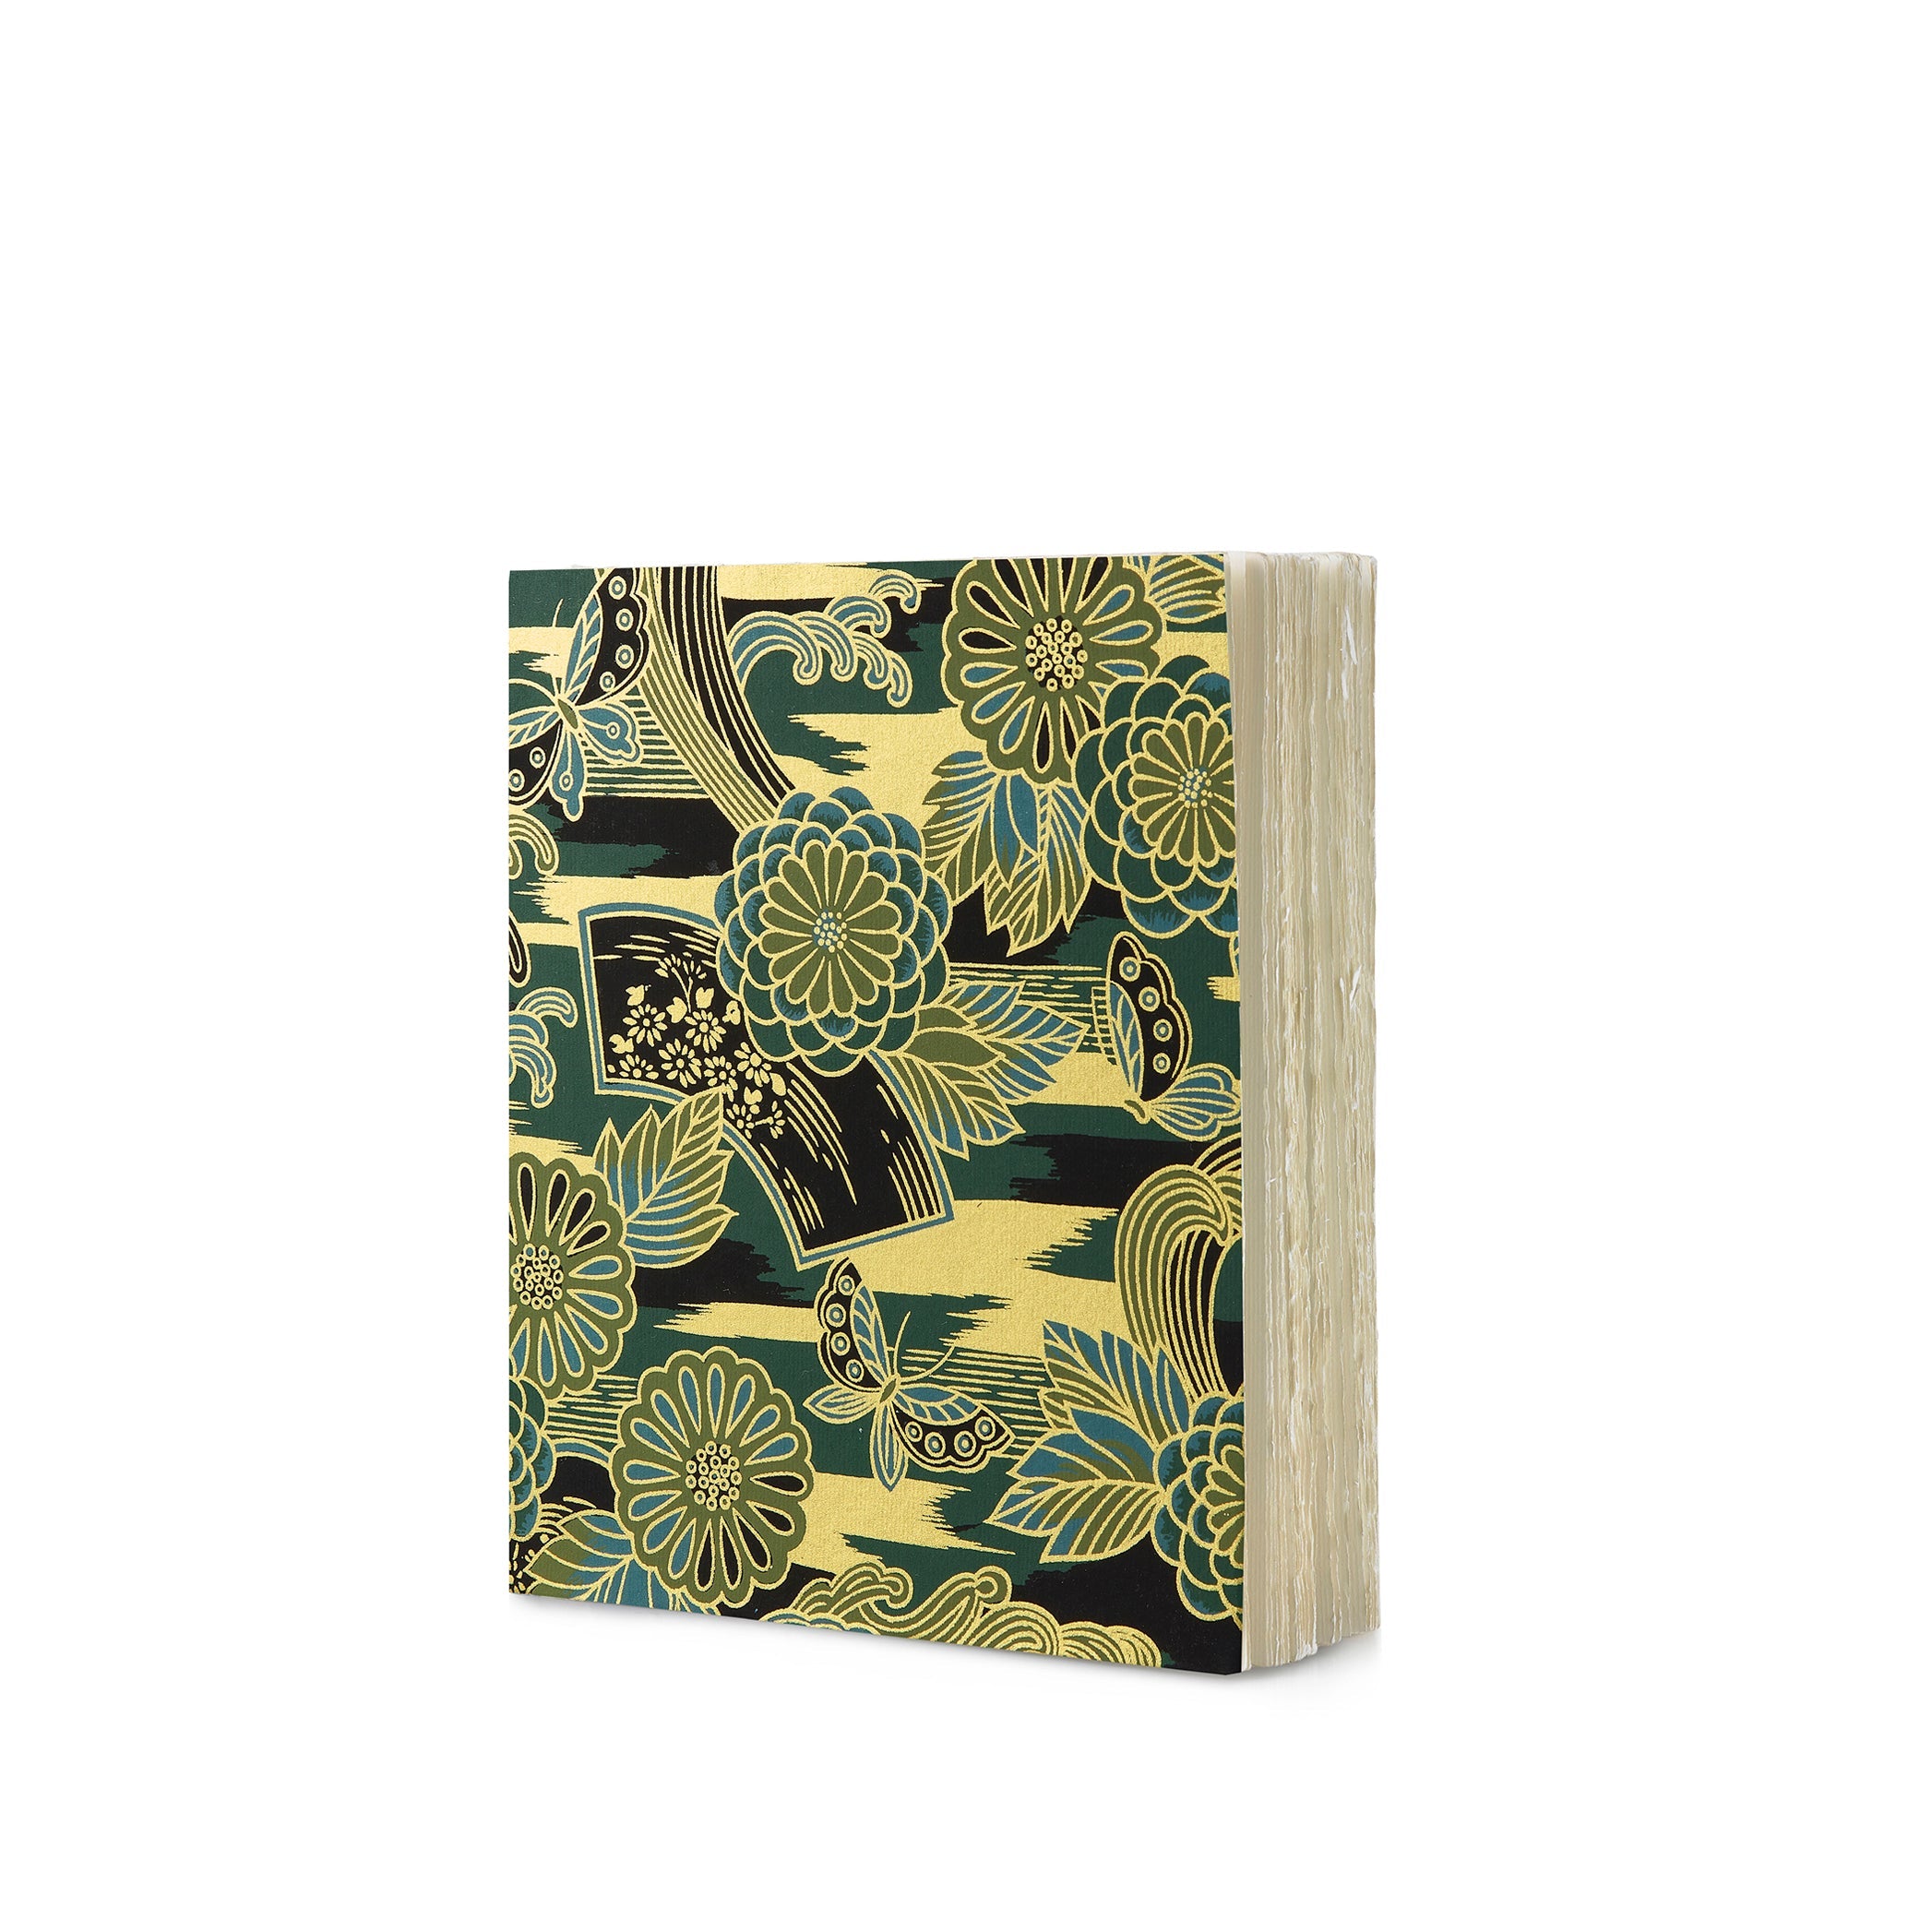 Handprinted Japanese Chiyogami Covered Sketchbook, Vert Papillons, 20cm x 17cm